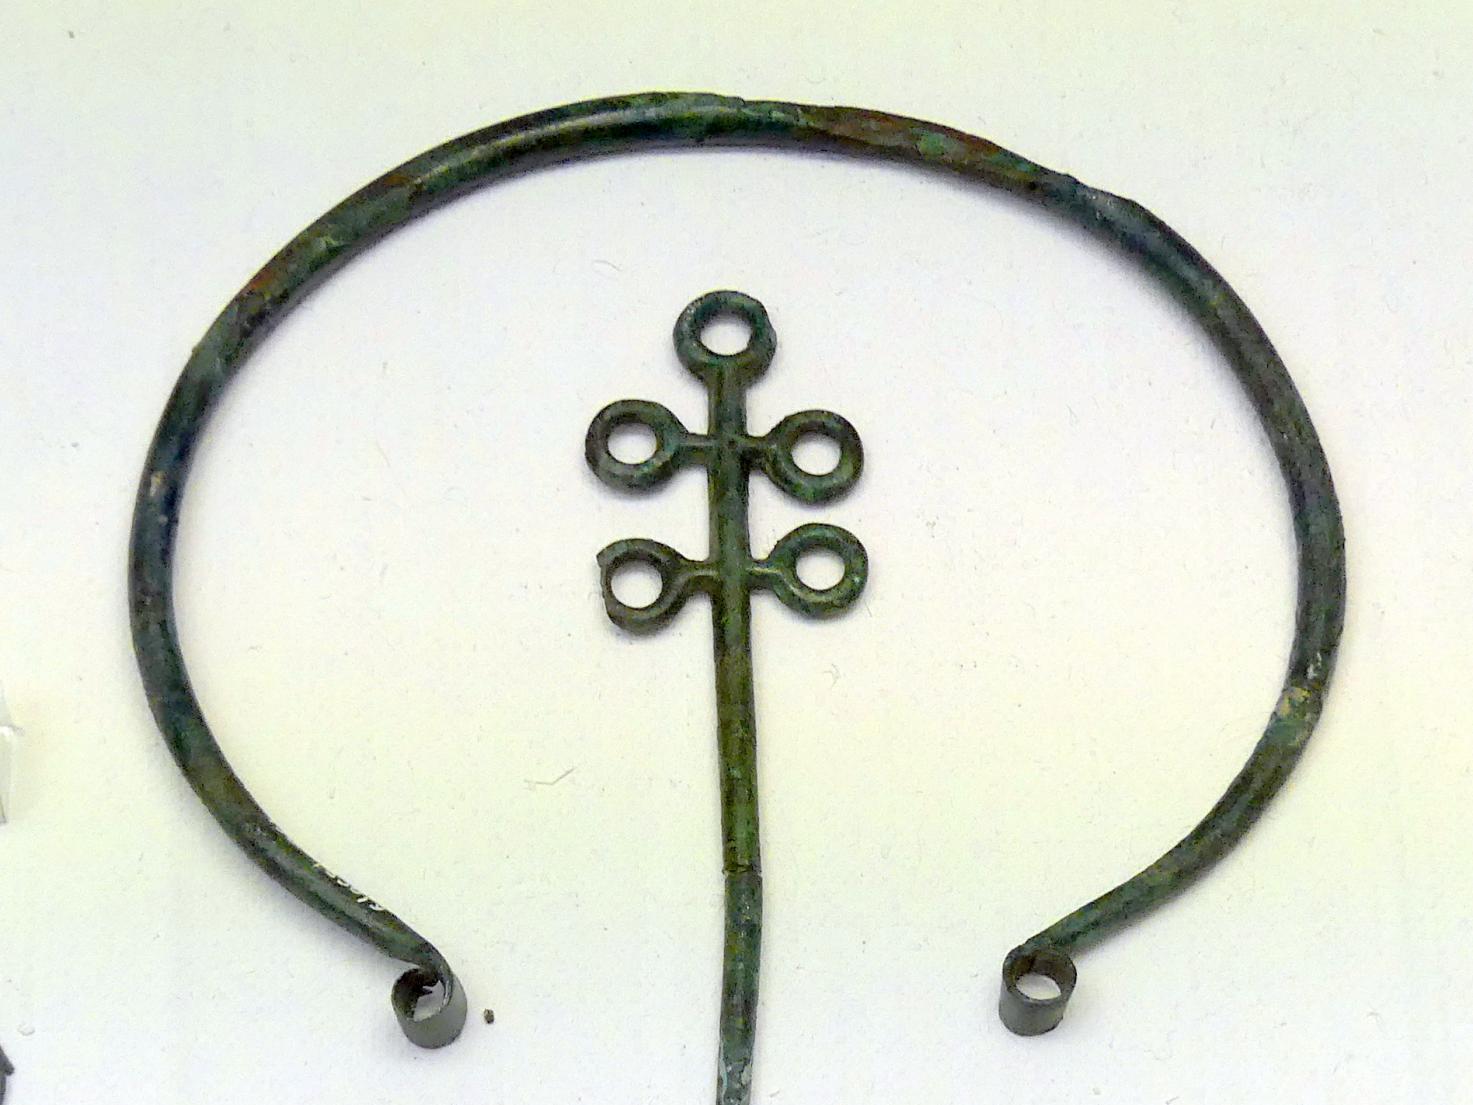 Öenhalsring, Frühe Bronzezeit, 3365 - 1200 v. Chr., Bild 1/2